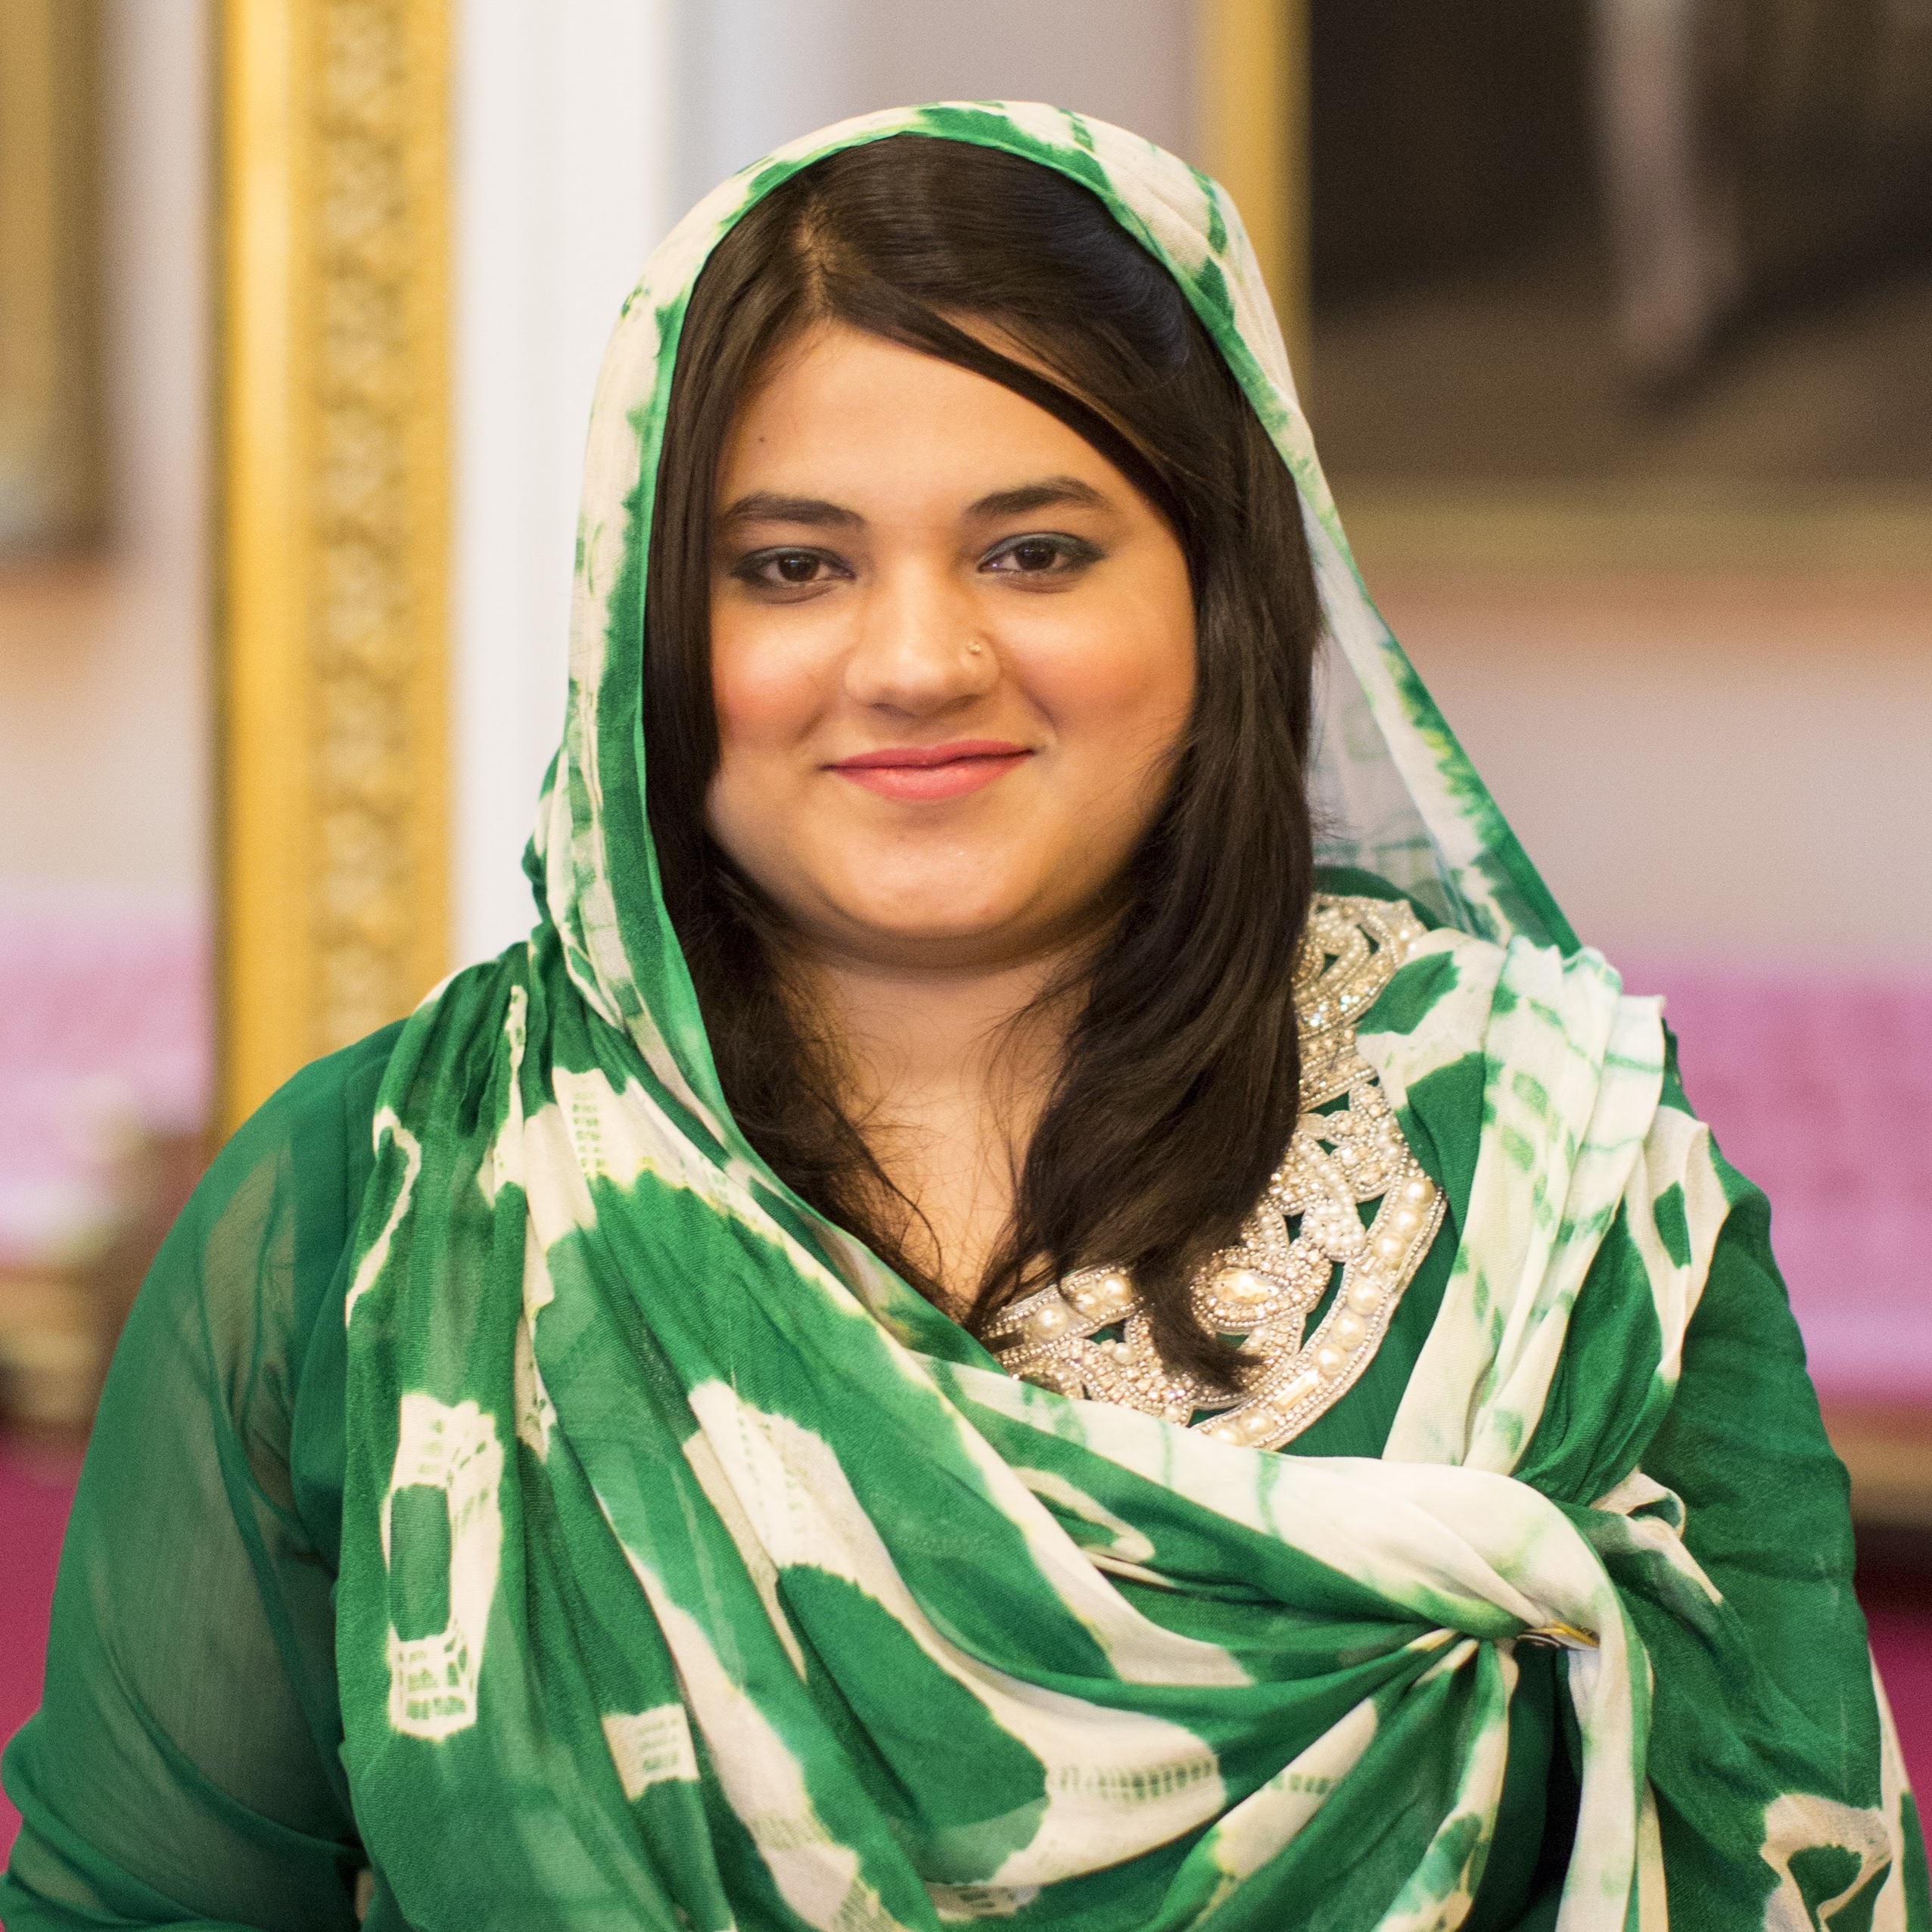 Zainab Bibi 2016 Queen's Young Leader from Pakistan